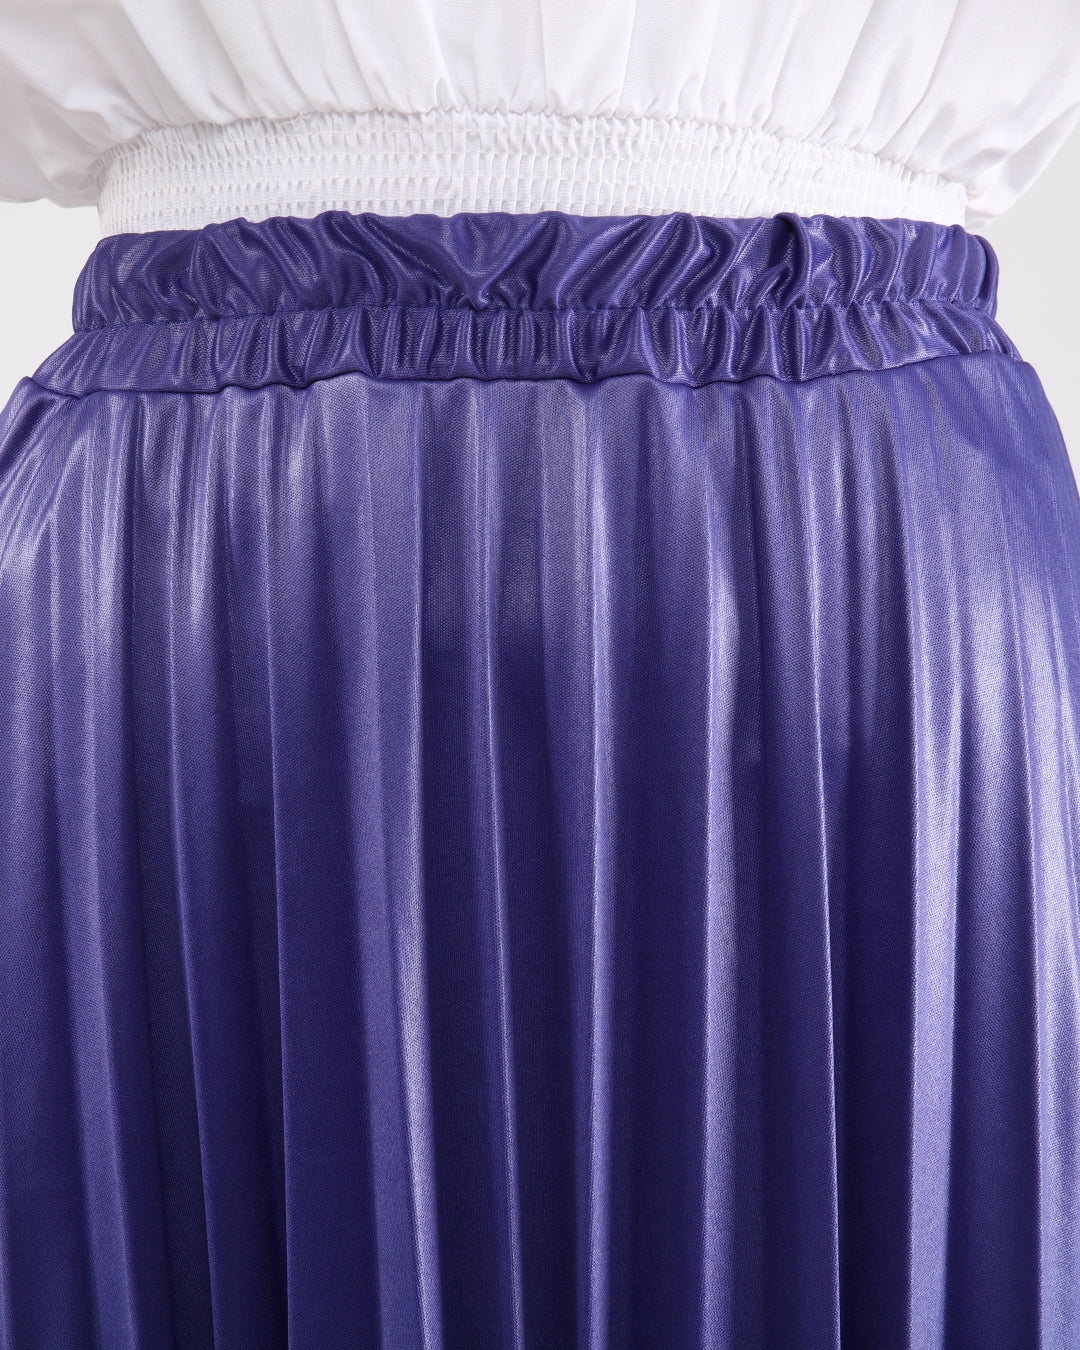 Skirt - 9007 - Purple